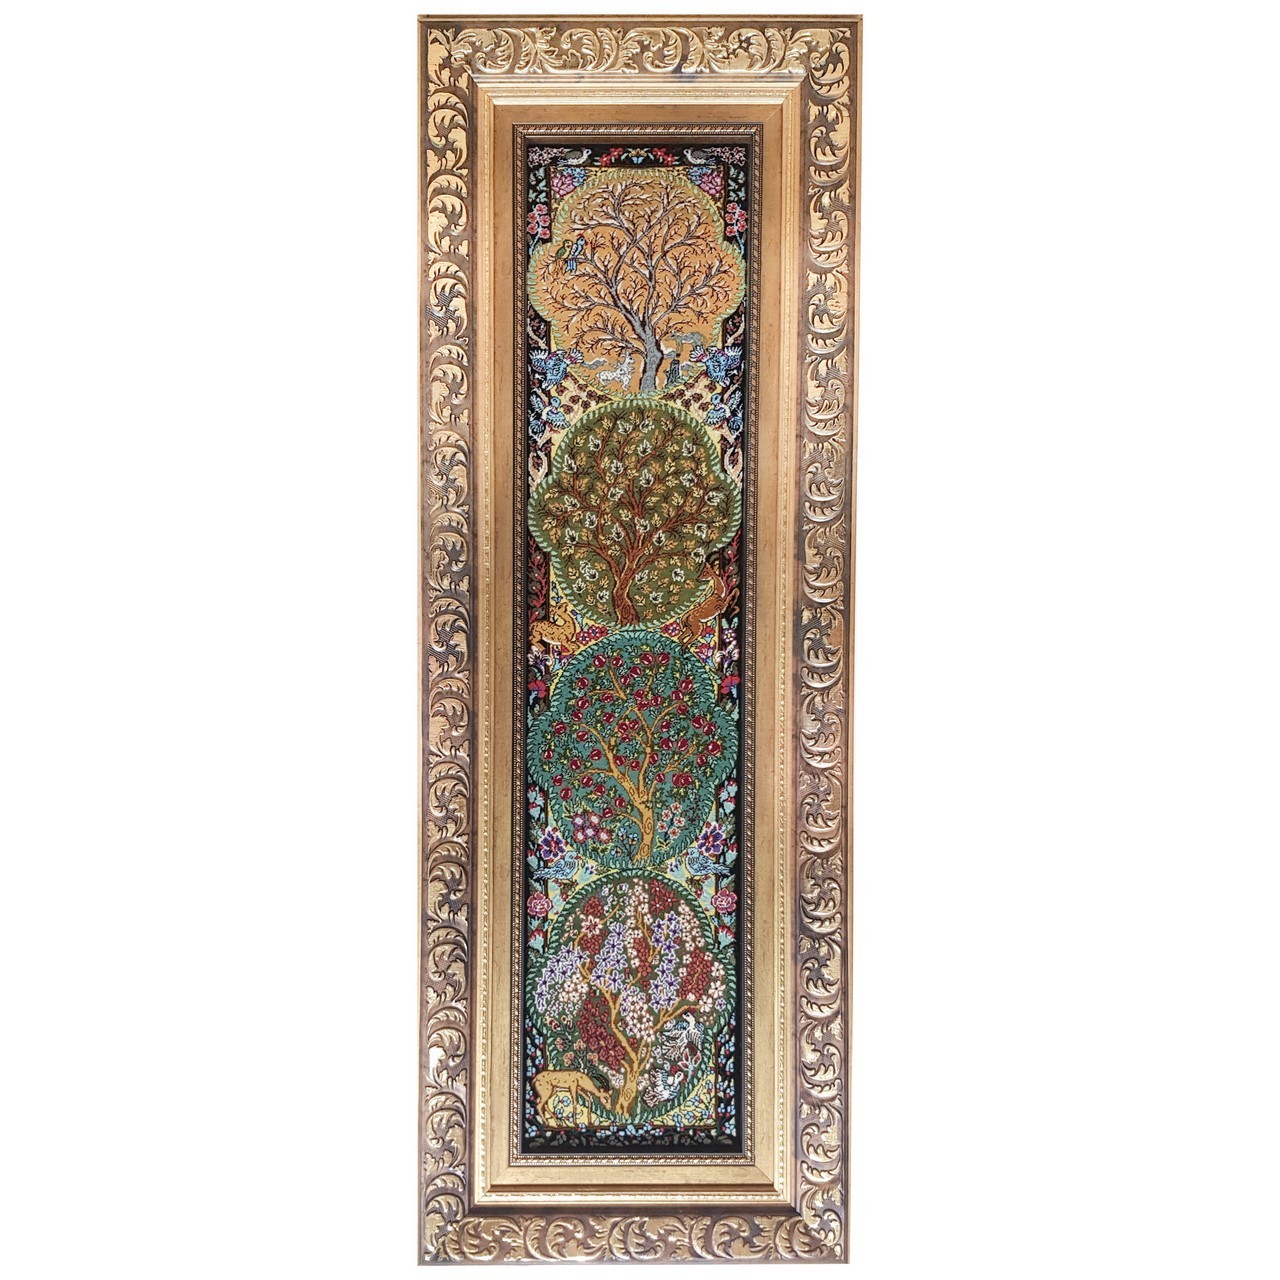 Pictorial Tabriz Carpet Ref: 911168